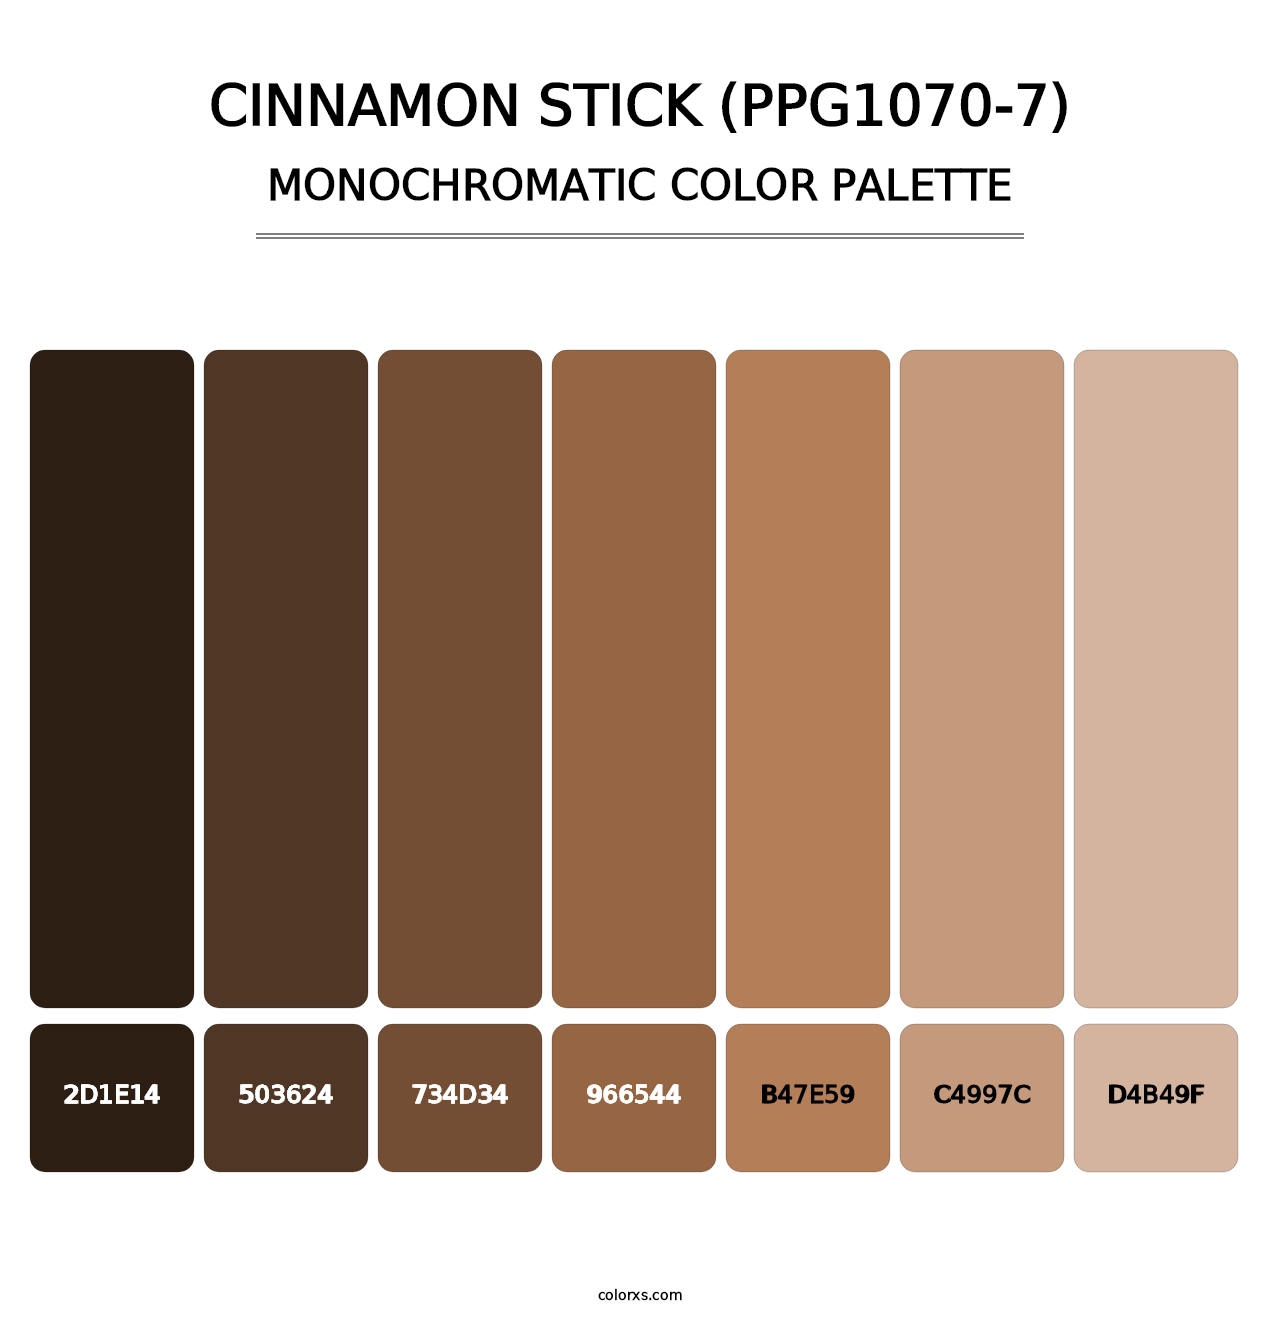 Cinnamon Stick (PPG1070-7) - Monochromatic Color Palette